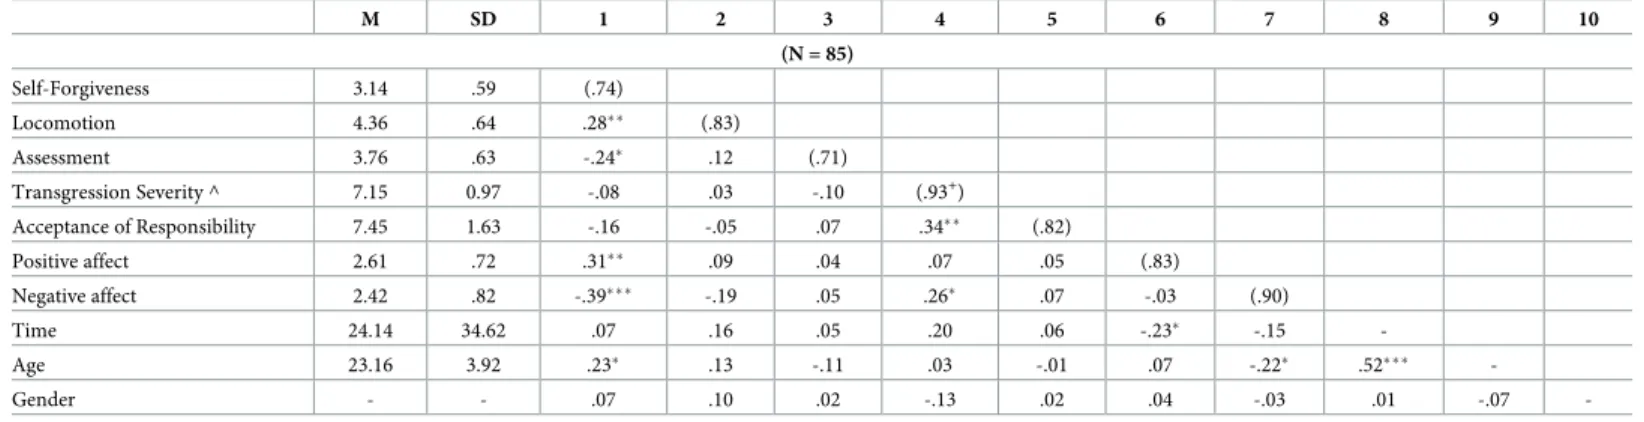 Table 3. Descriptive and correlations between variables (Study 3).